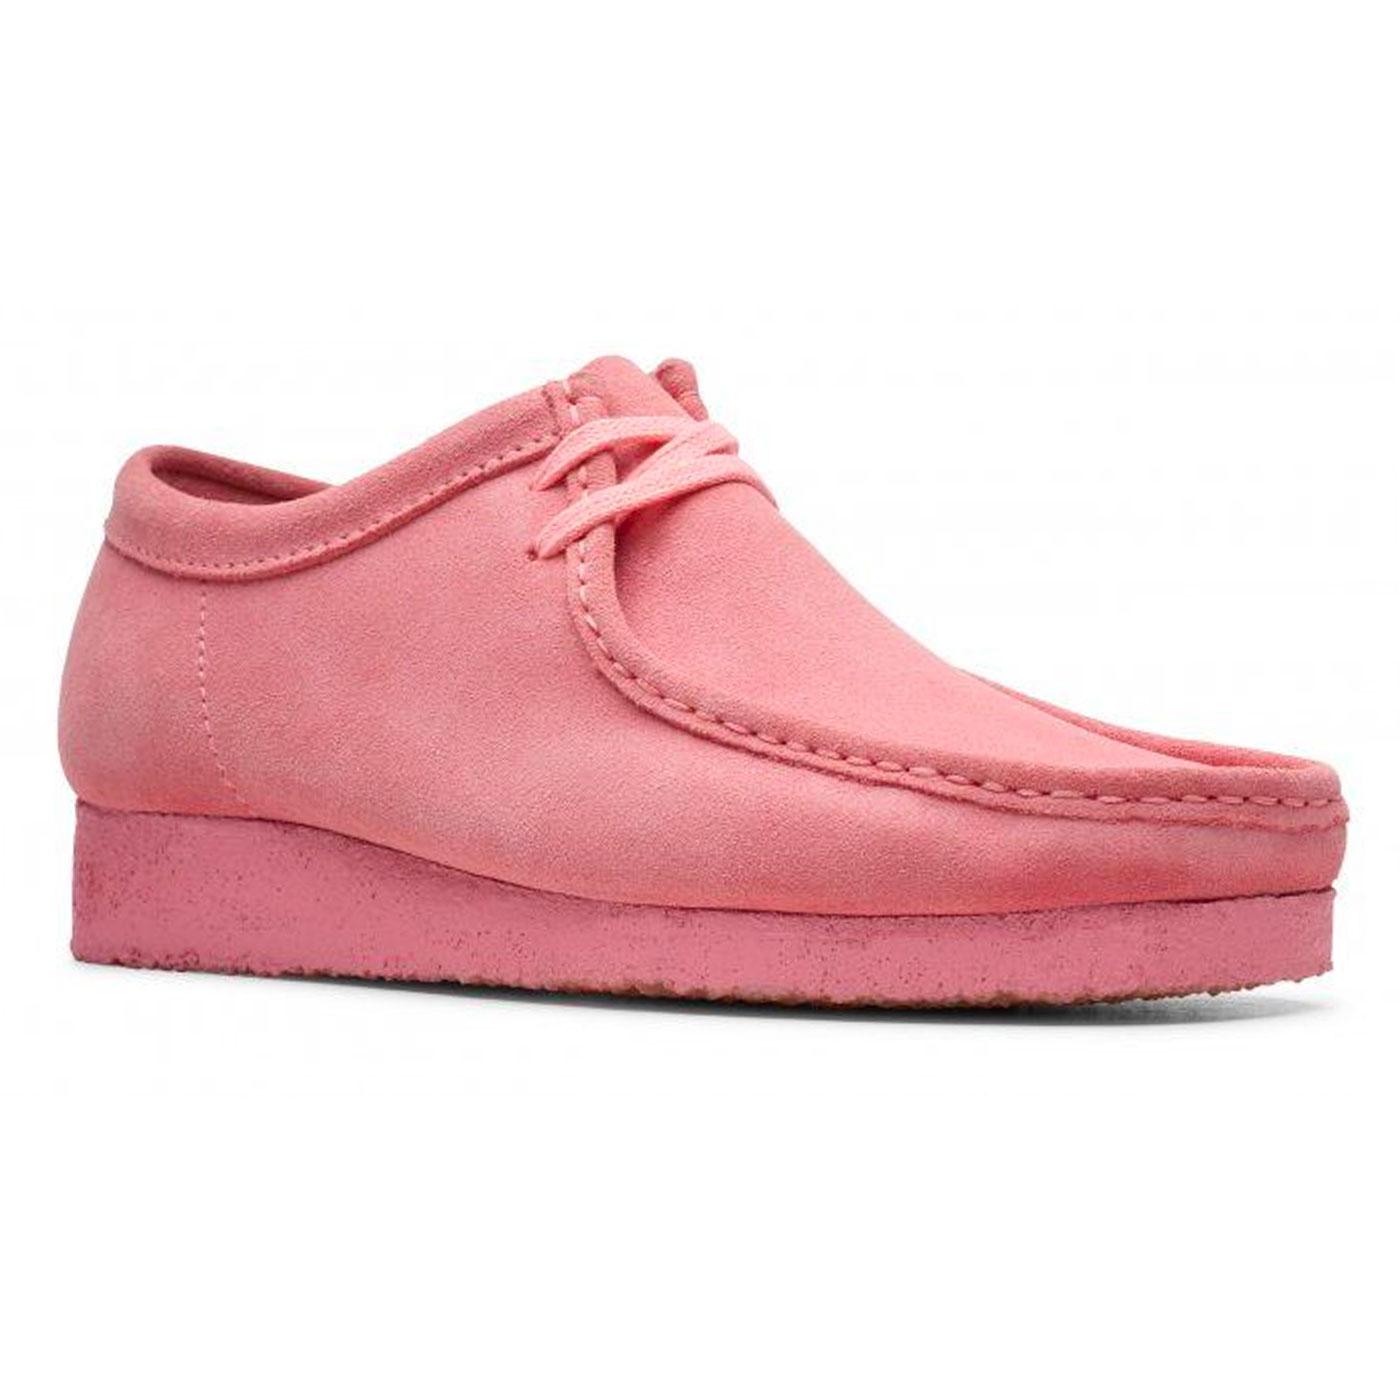 CLARKS Wallabee Women's Retro Shoes in Pink